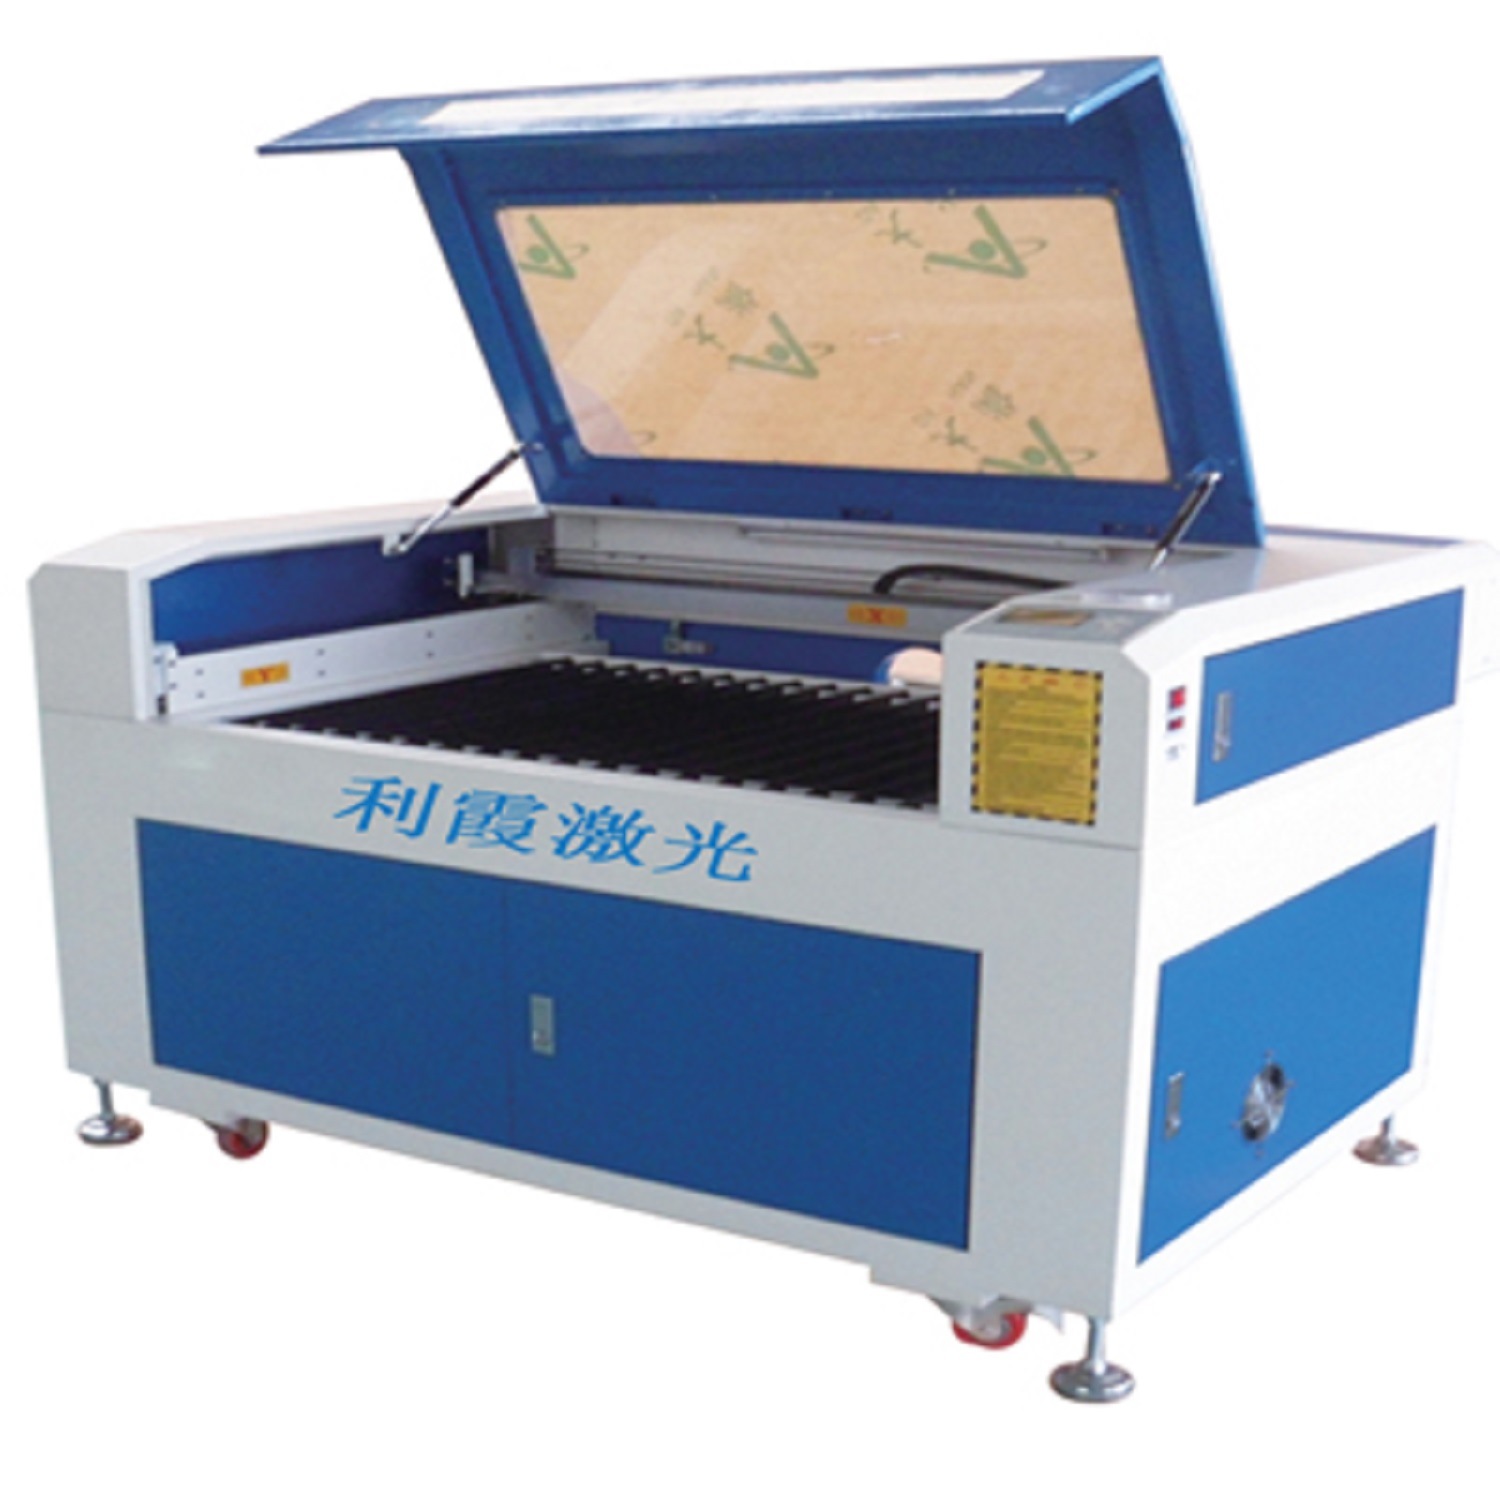 Mini Laser Cutting and Engraving Machine